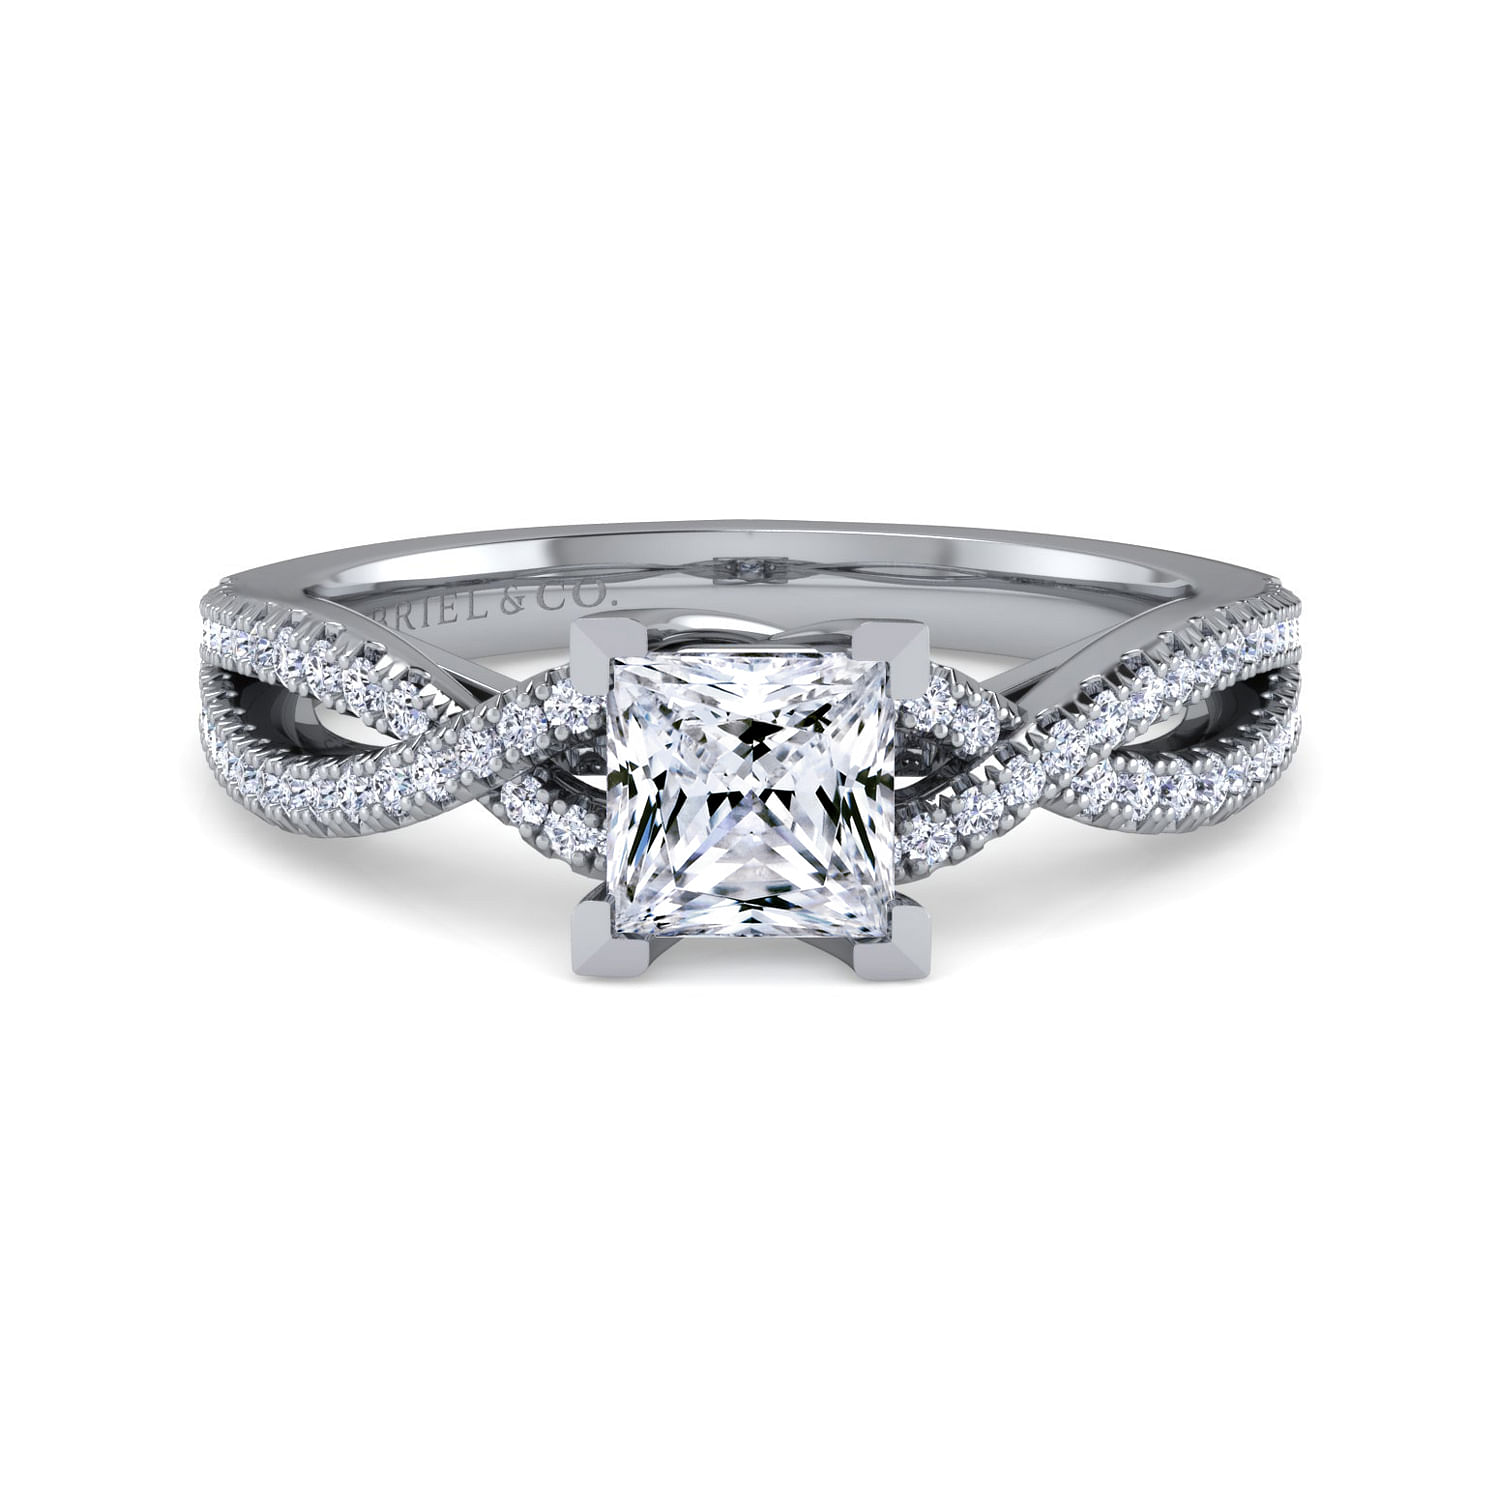 Gina - 14K White Gold Twisted Princess Cut Diamond Engagement Ring